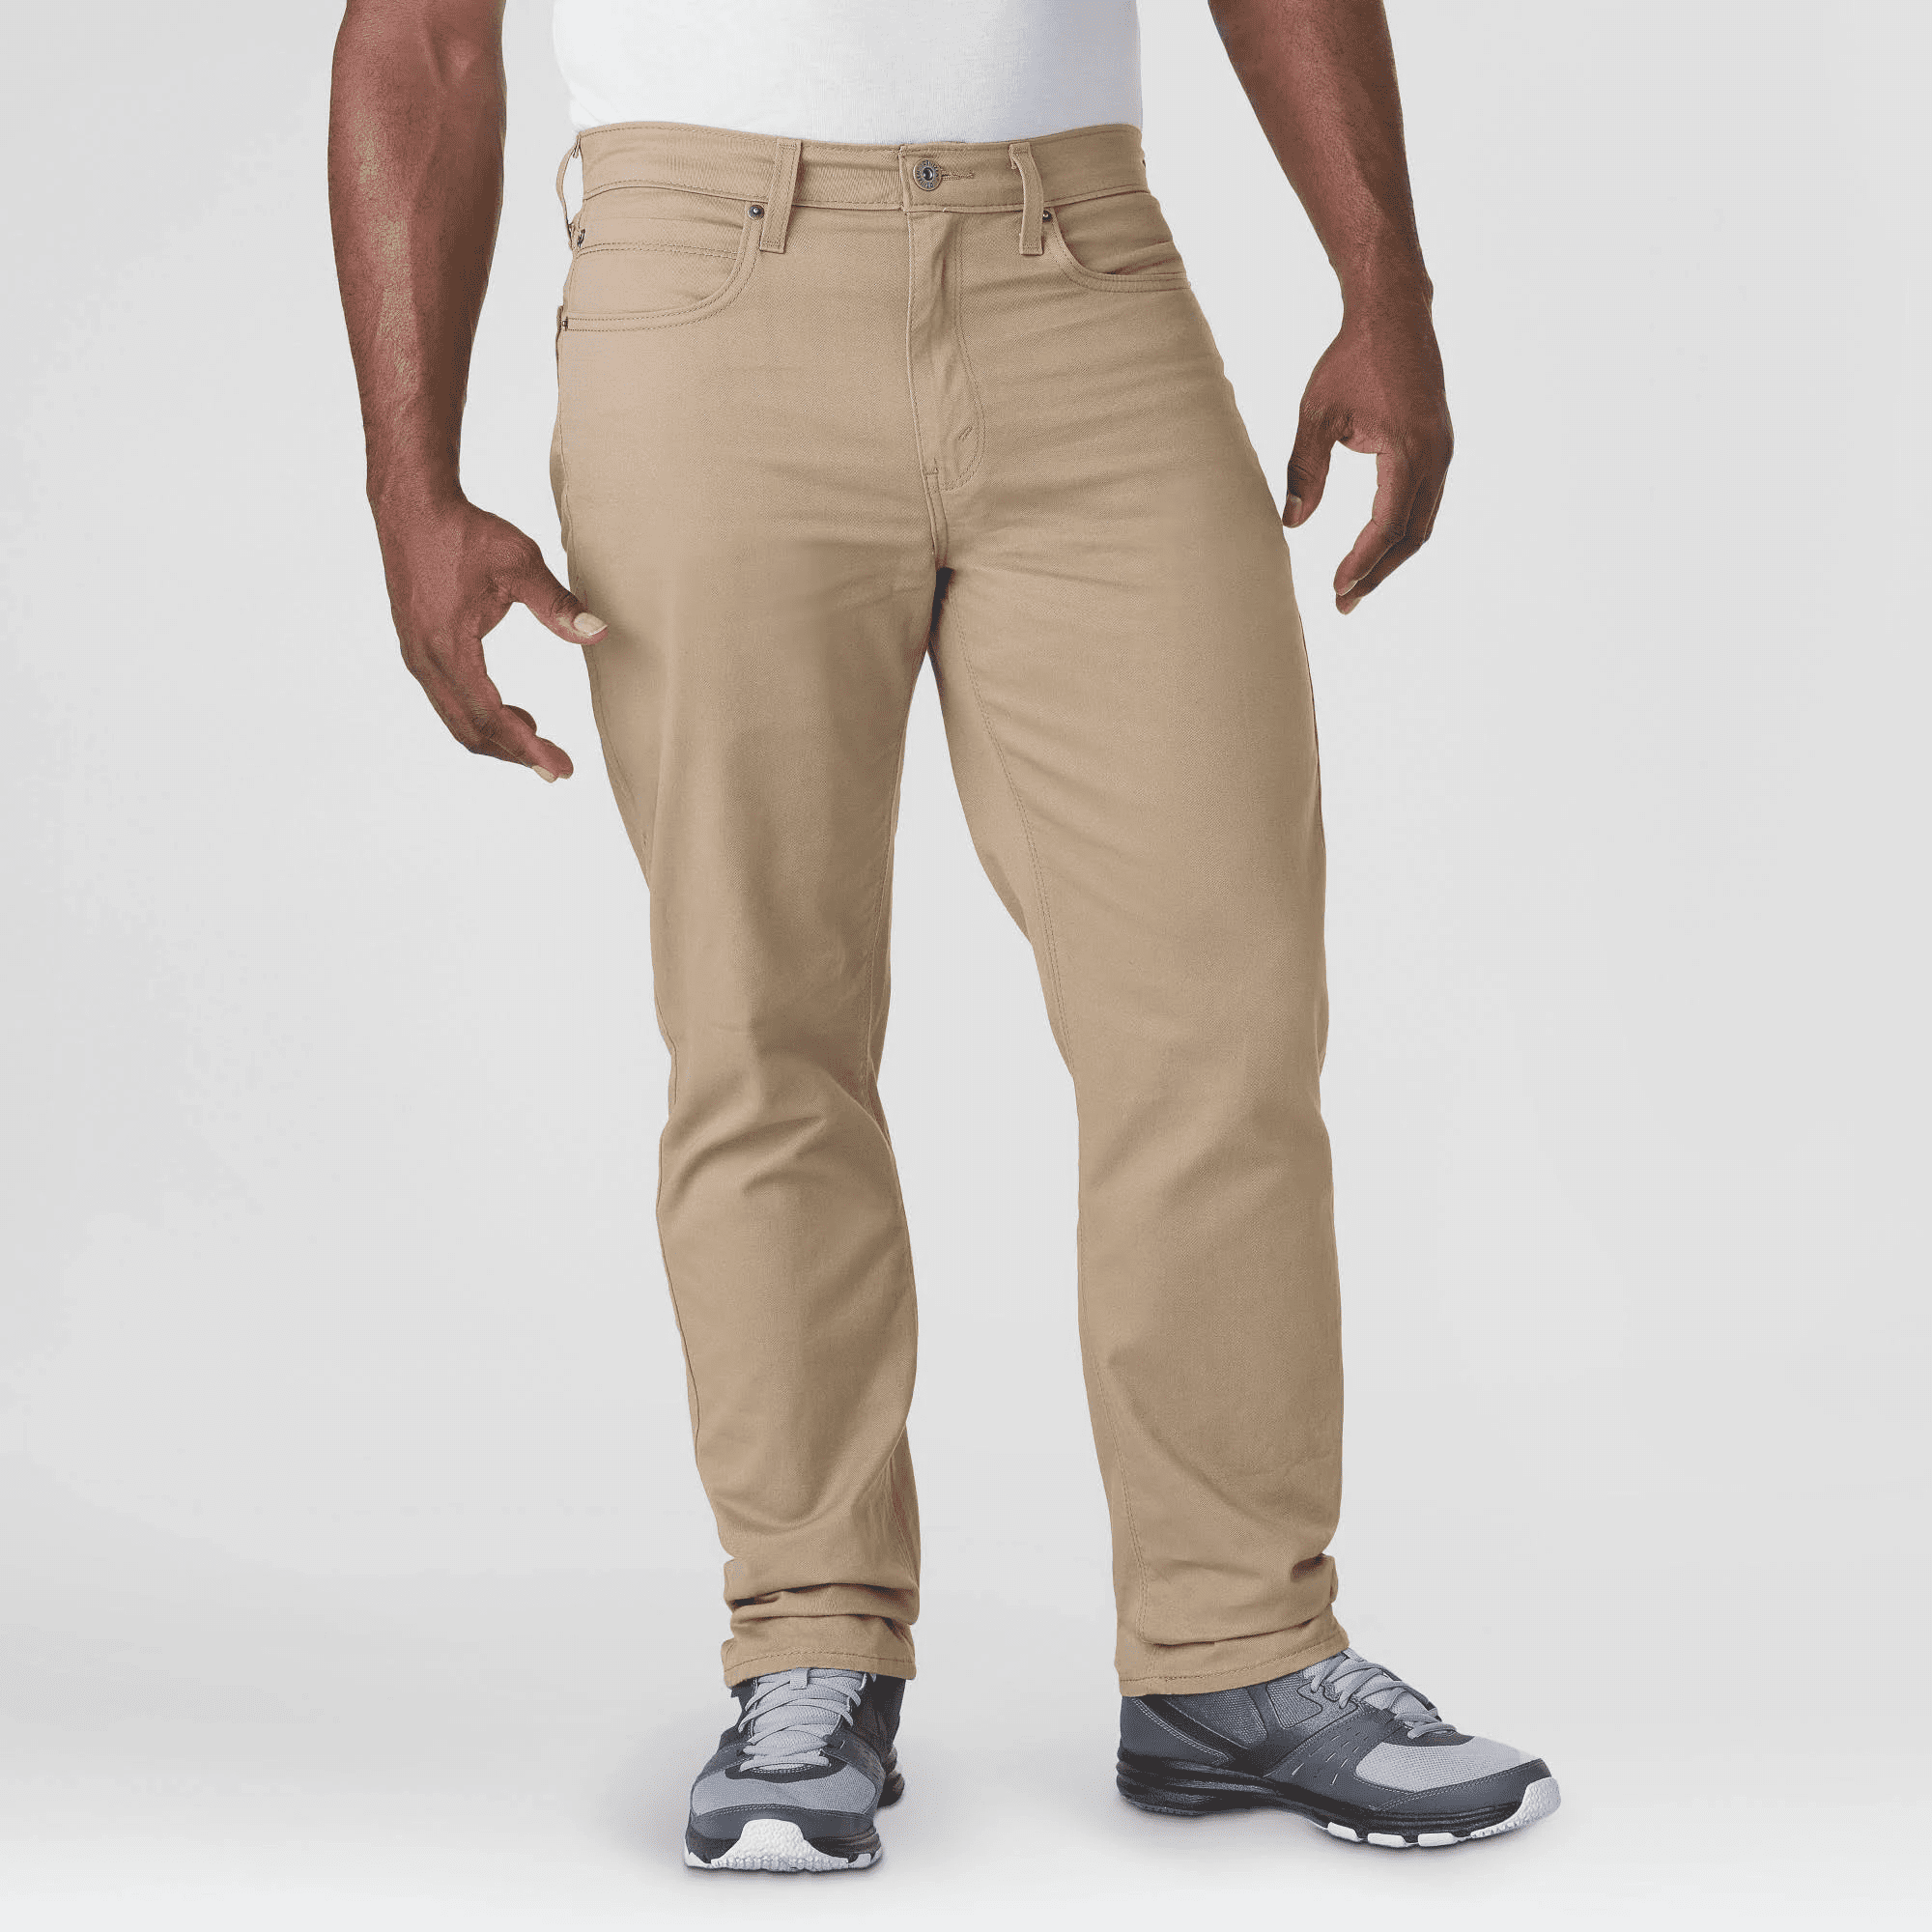 Denizen from Levi's Men's 231 Athletic Fit Taper Jeans - British Khaki,  36x34 